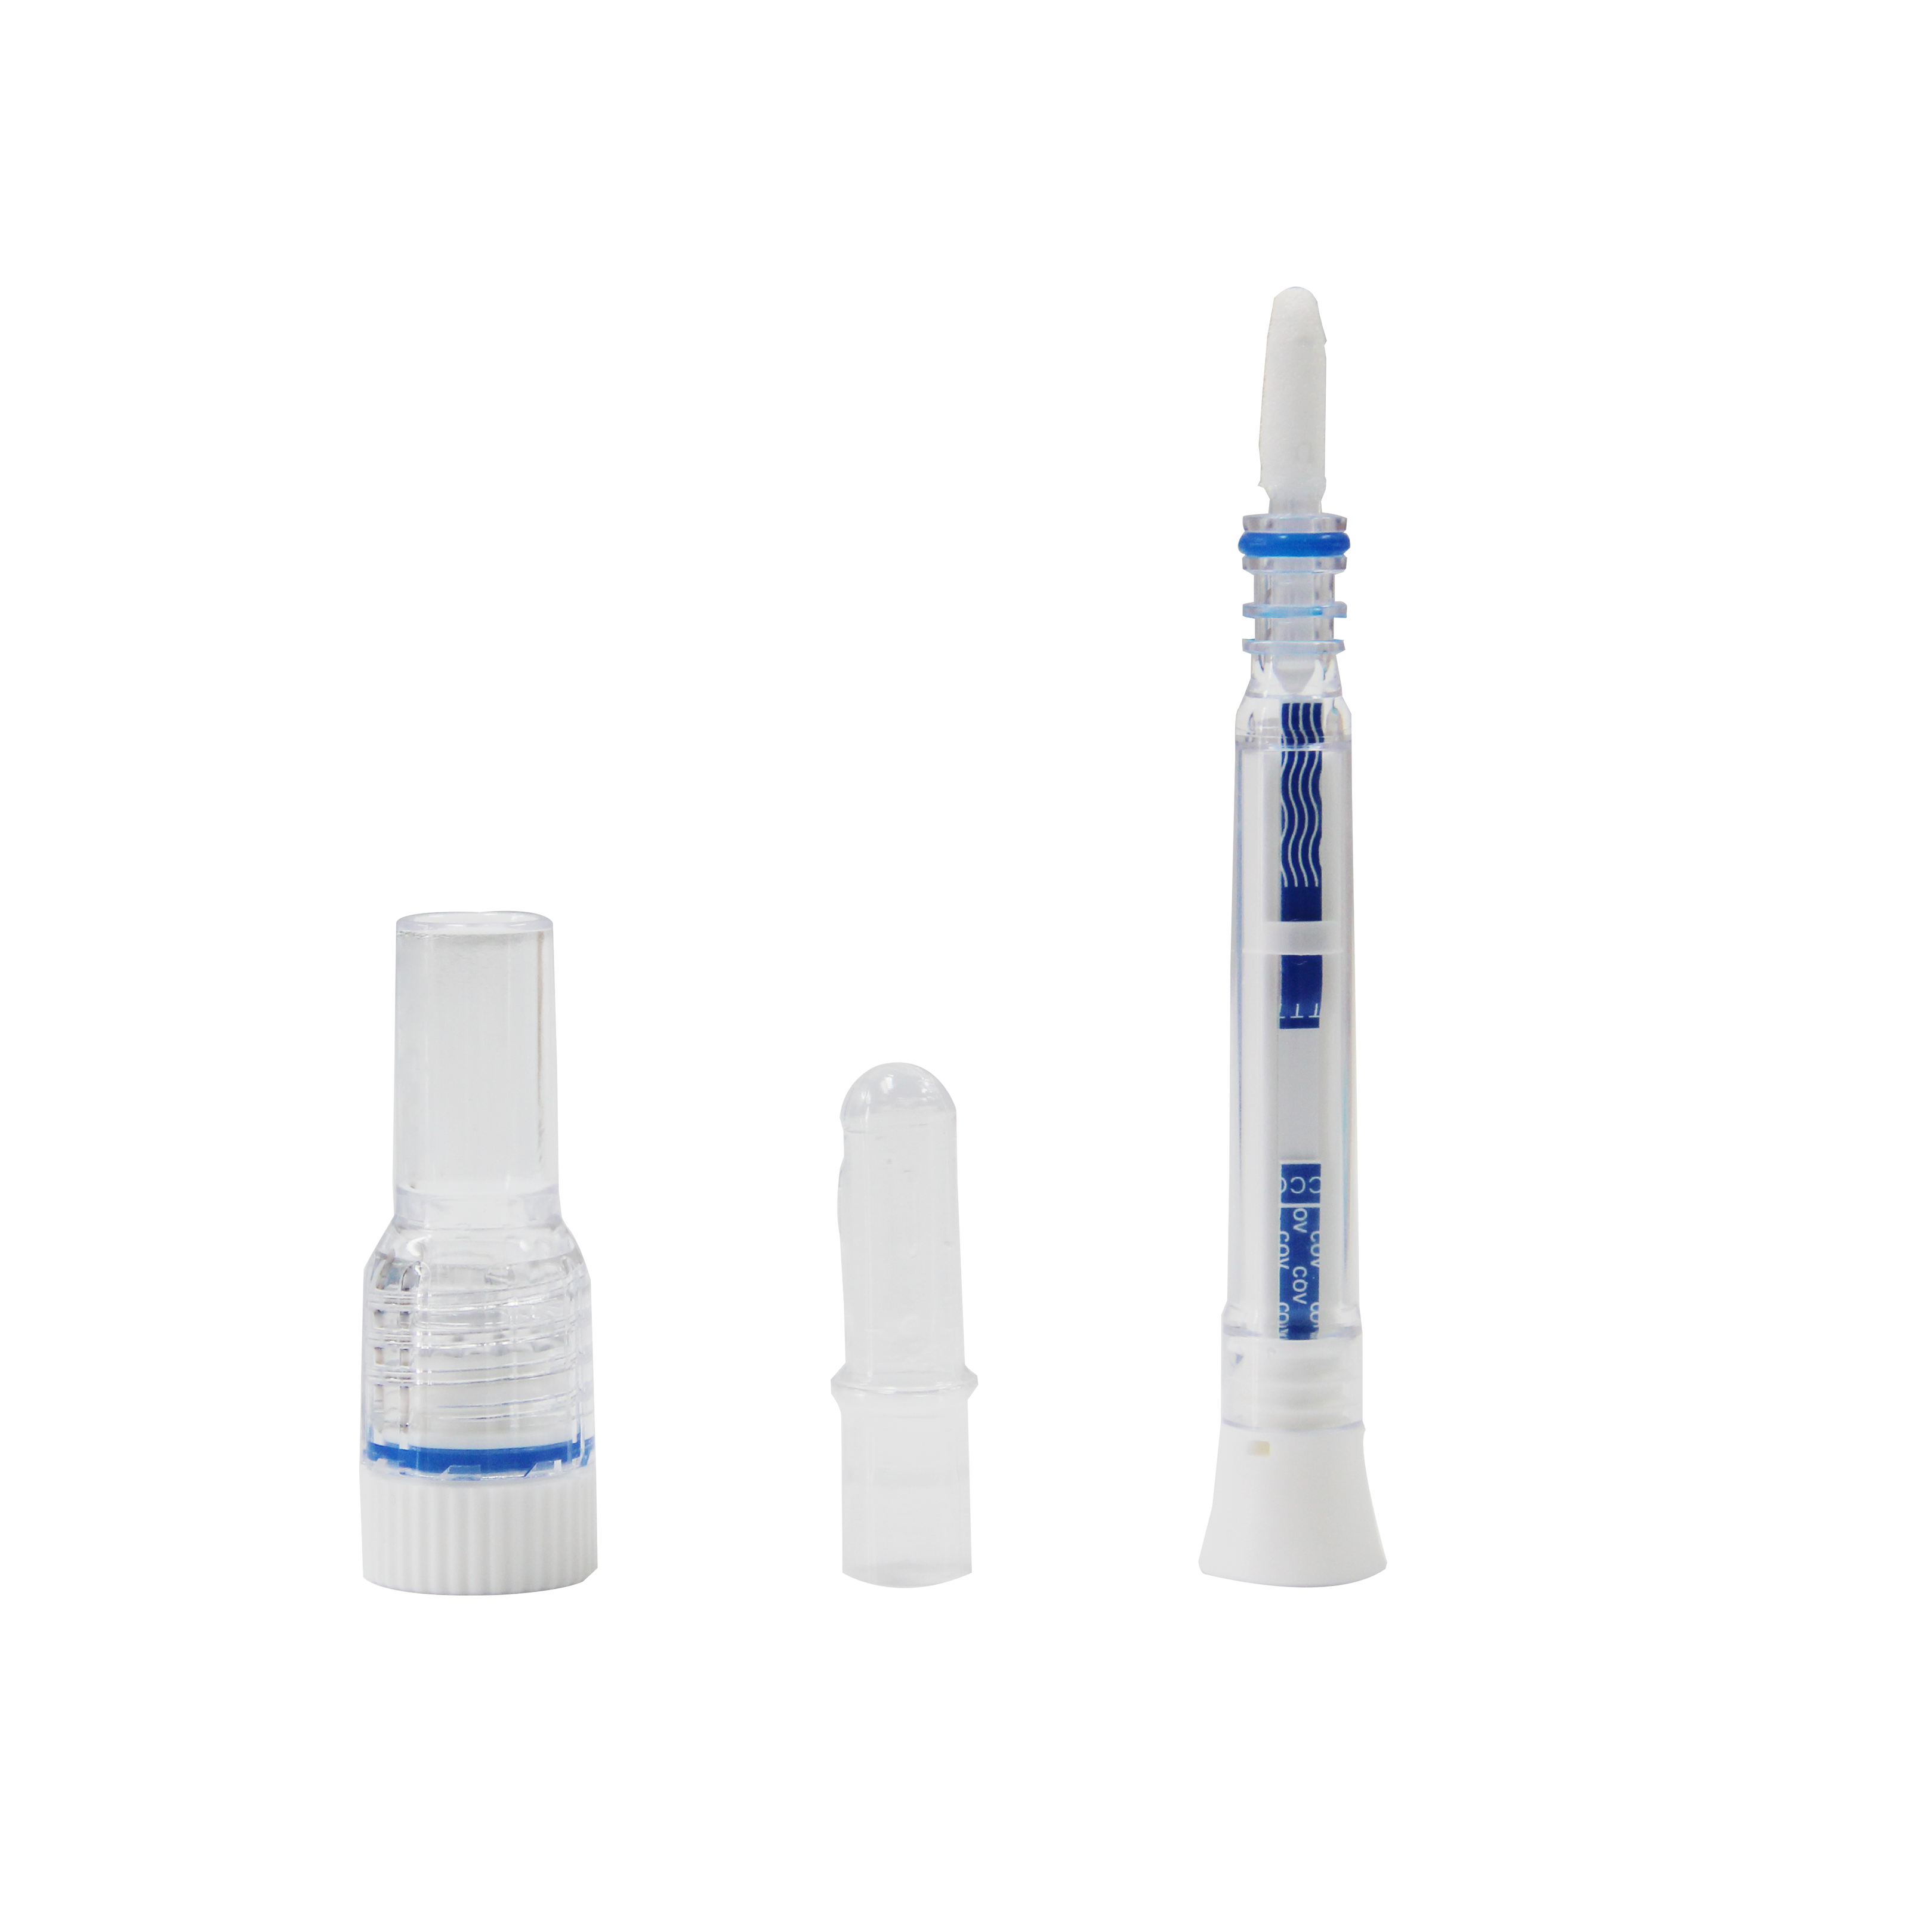 COVID-19 Rapid Antigen Nasal Pen Test - High Sensitivity - Ecotest - General Home Use (20 Tests)